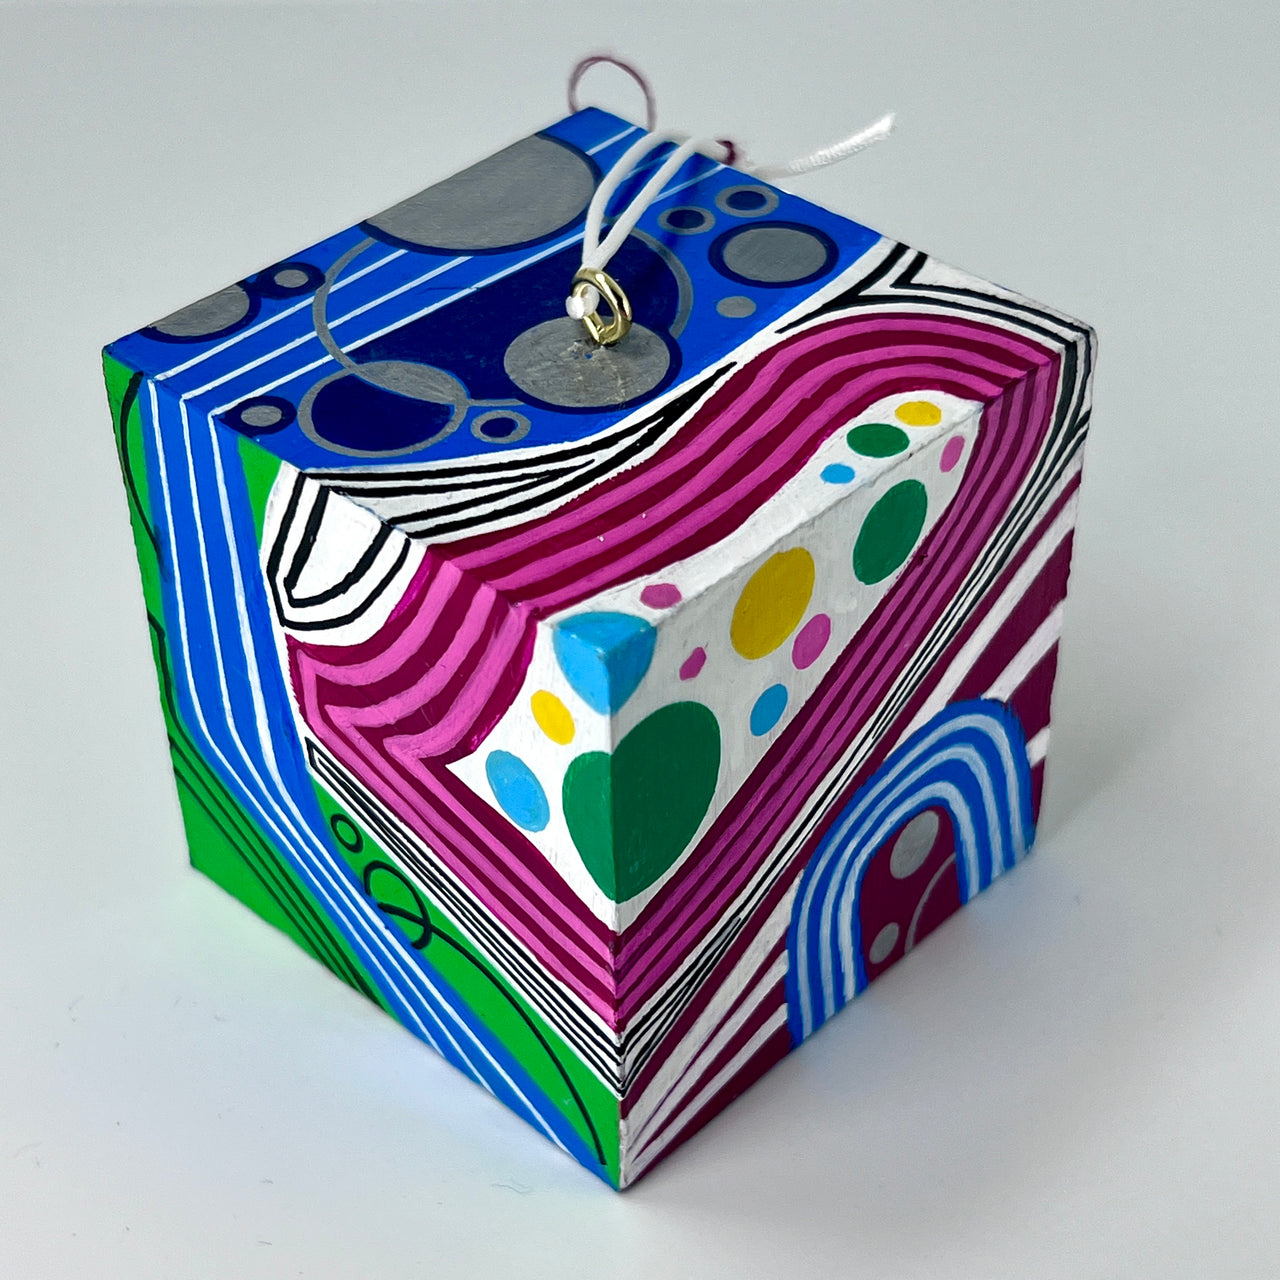 #21 - 3D Cube Art - 2.25" cube